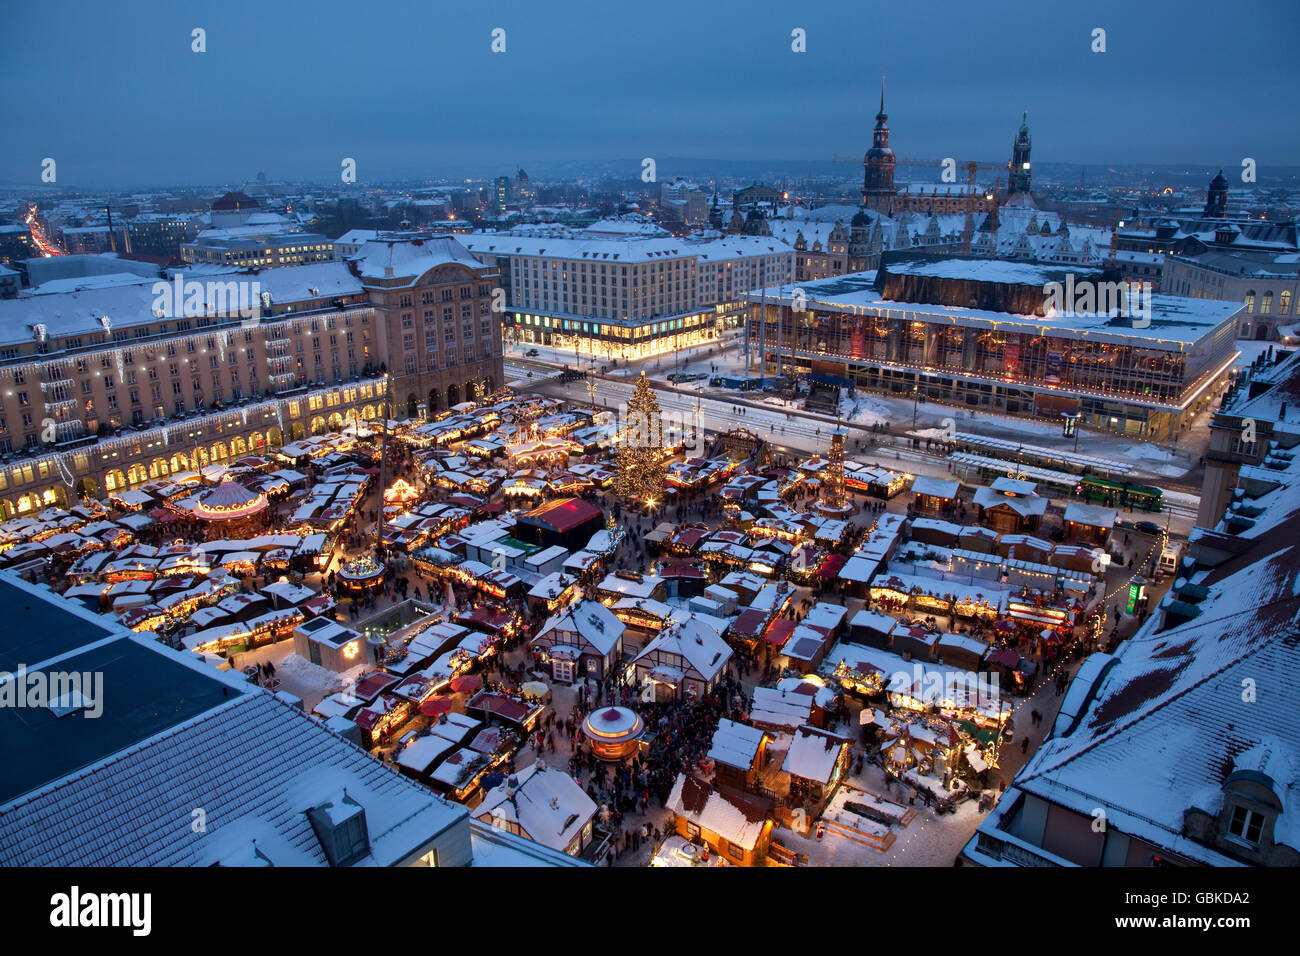 Striezelmarkt Christmas market, Altmarkt square, Dresden, Saxony Stock Photo